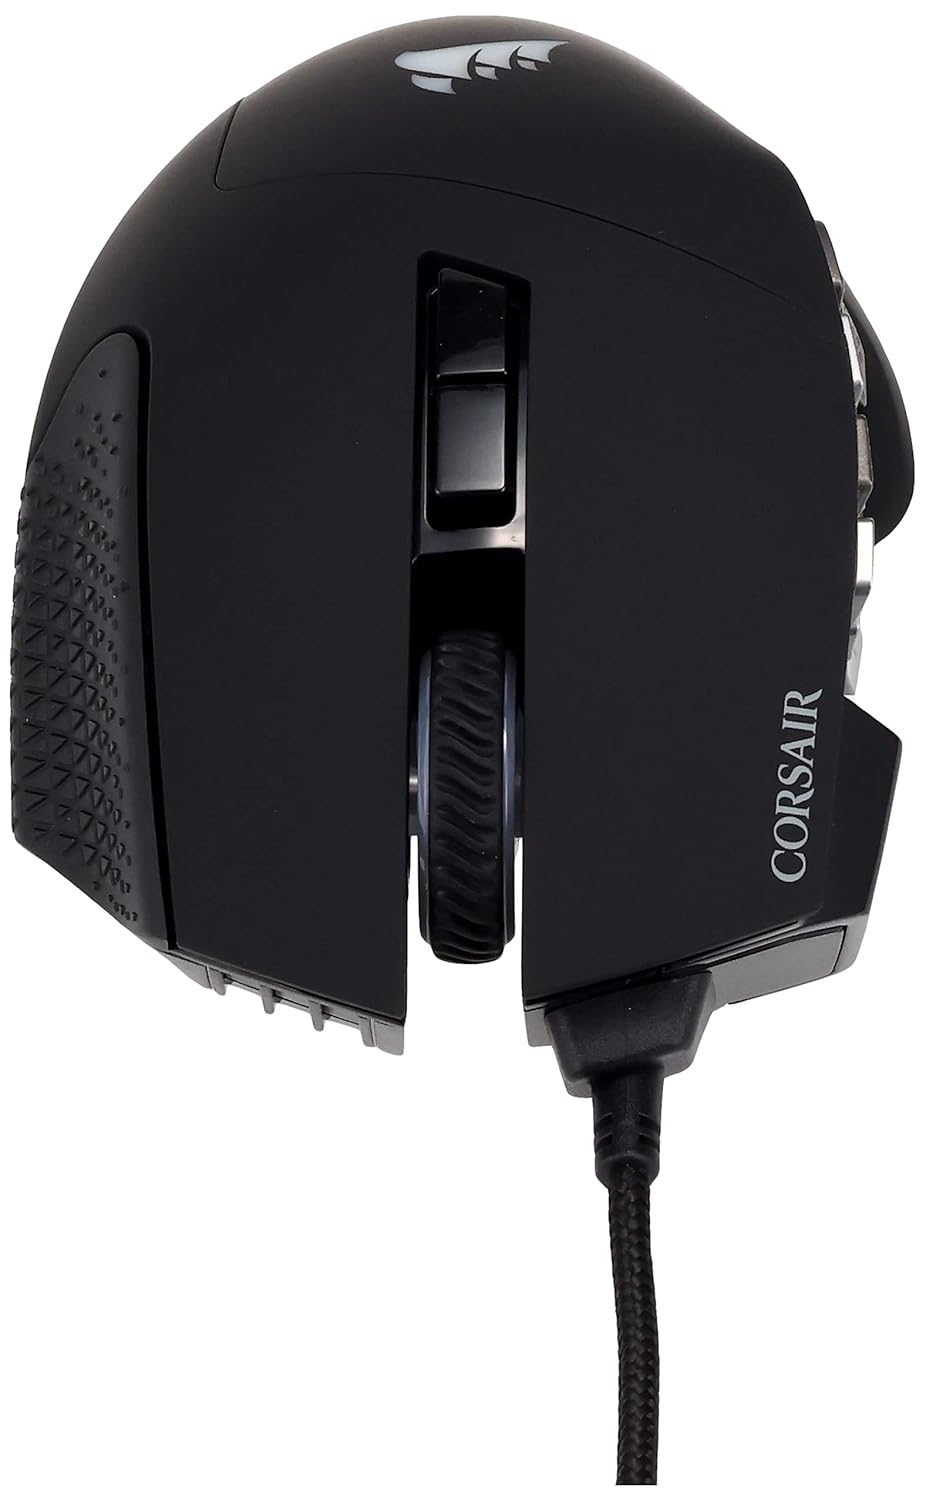 Corsair SCIMITAR ELITE RGB Optical MOBA/MMO Gaming Mouse; 18;000 DP; Black